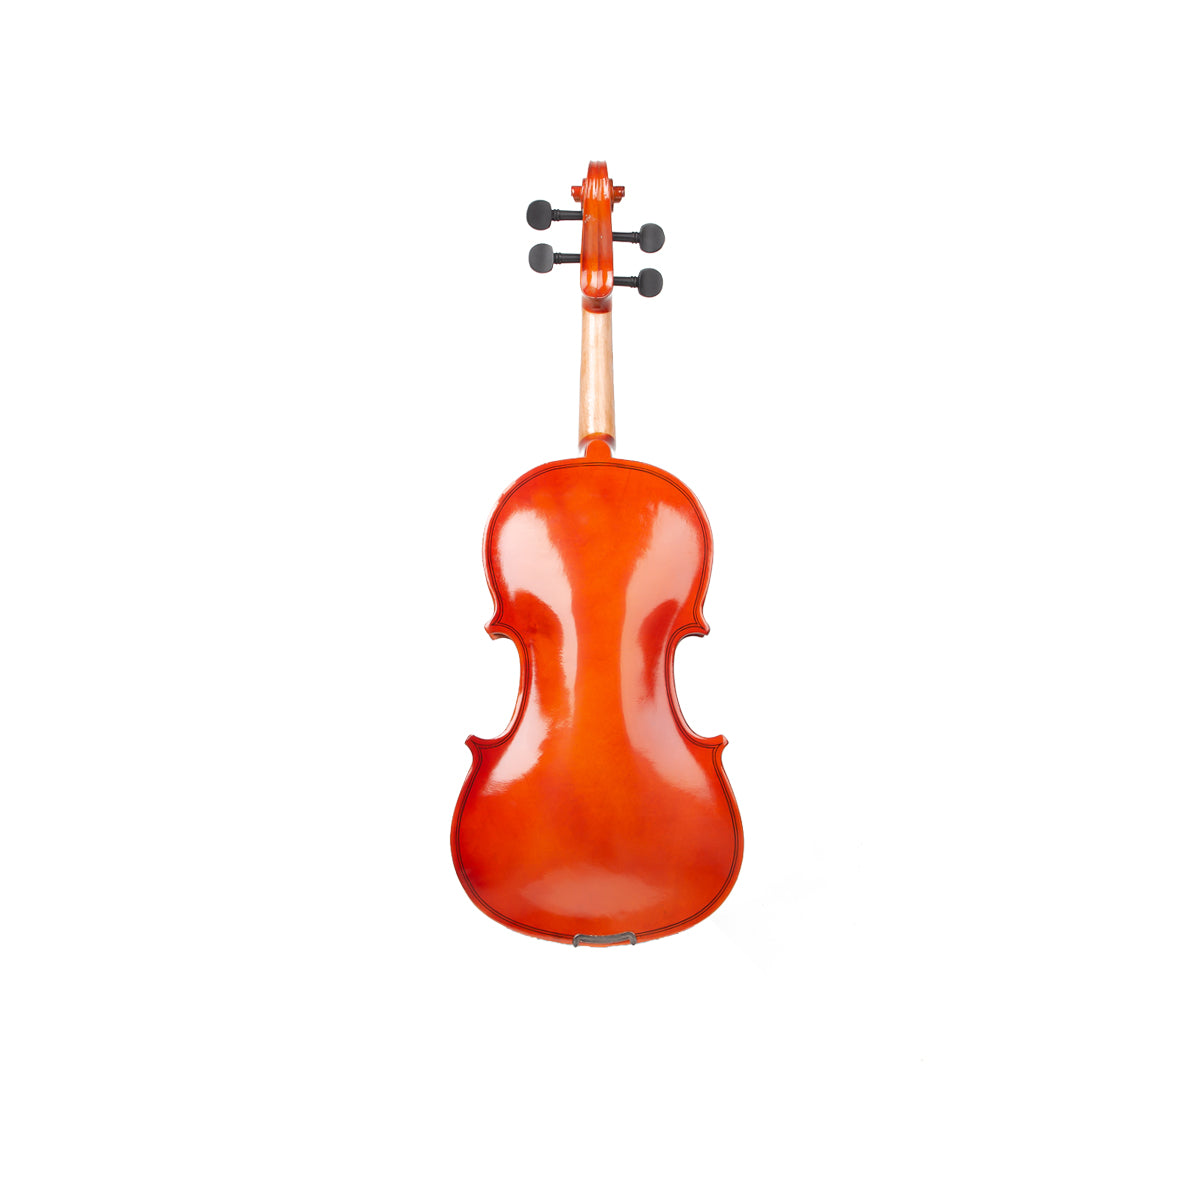 biola/violin mandalika size 4/4